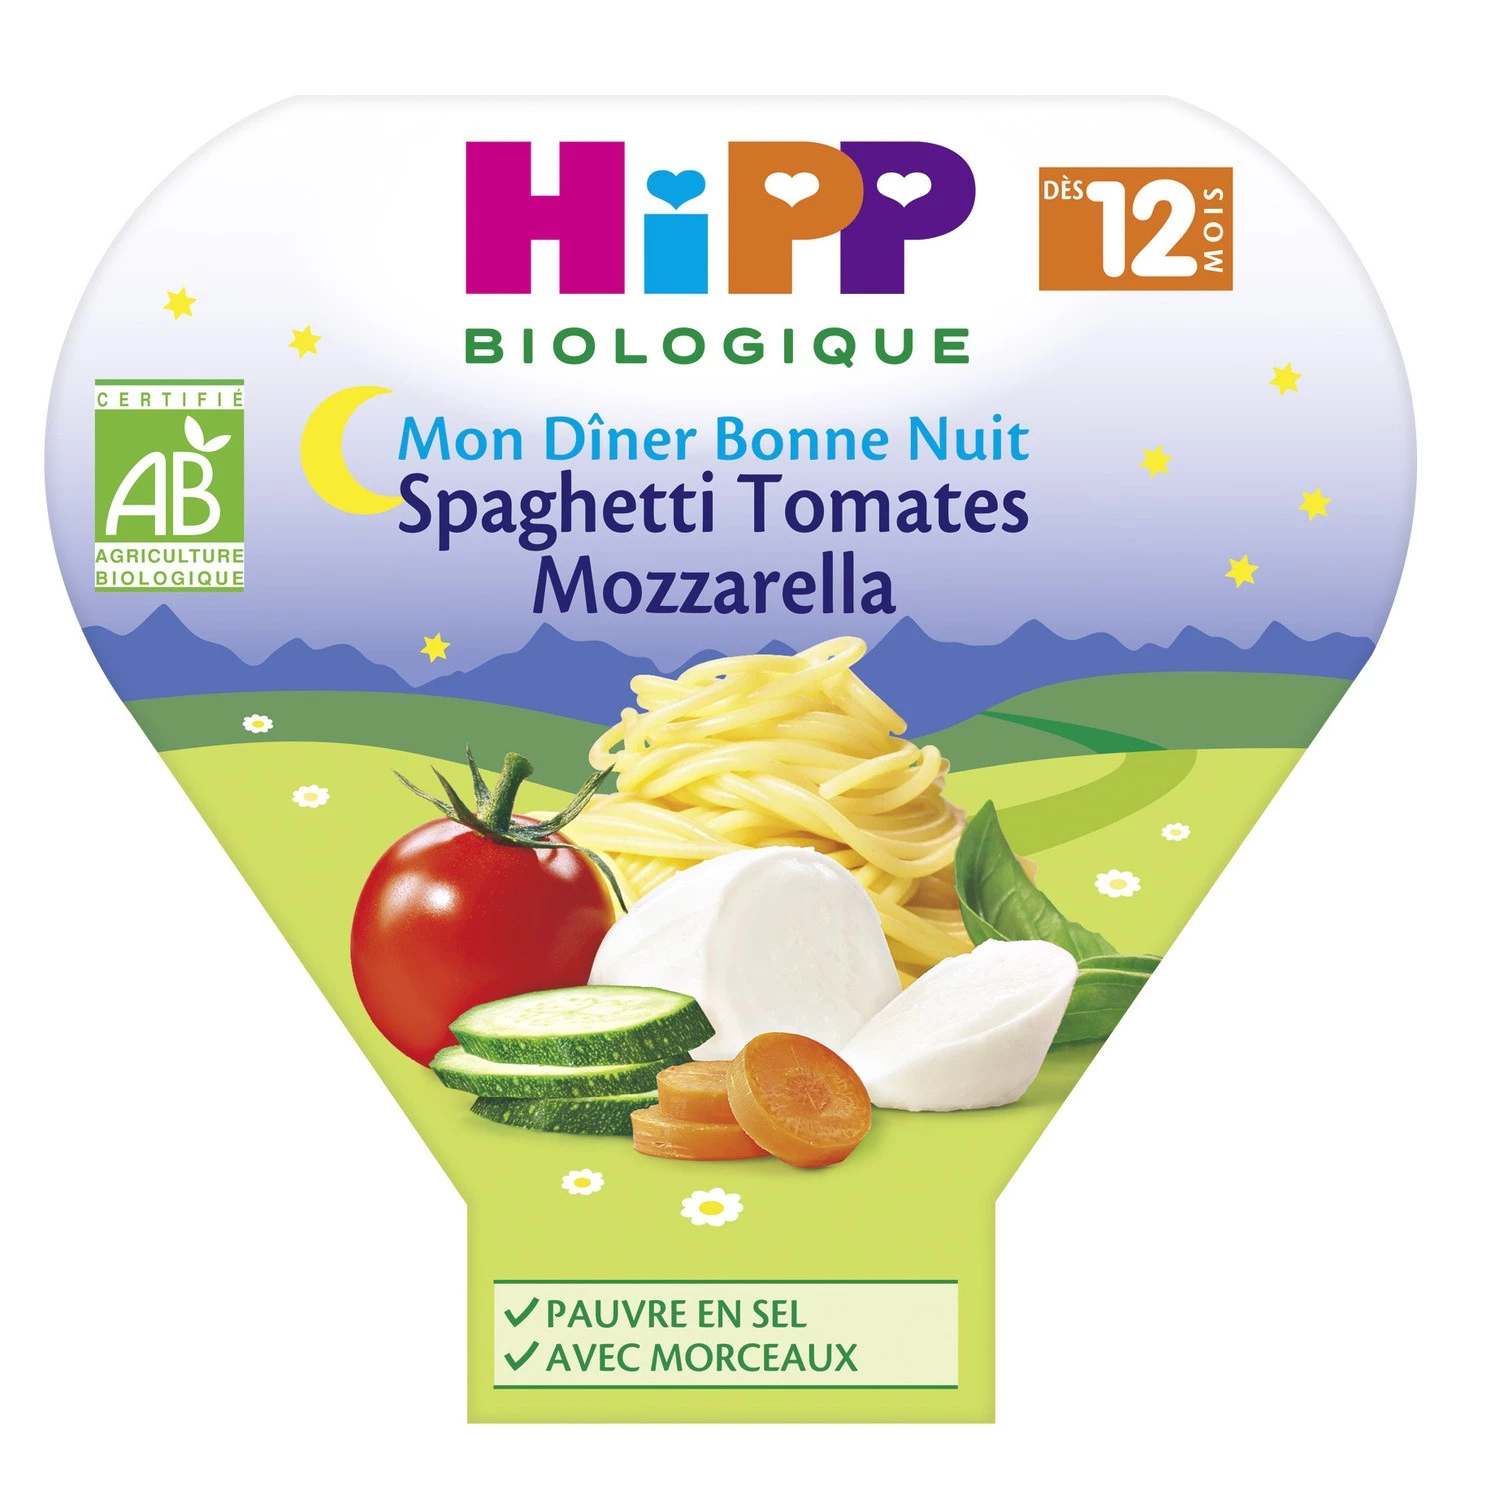 Spaghetti/tomaat/mozzarella babyschotel vanaf 12 maanden 230g - HIPP